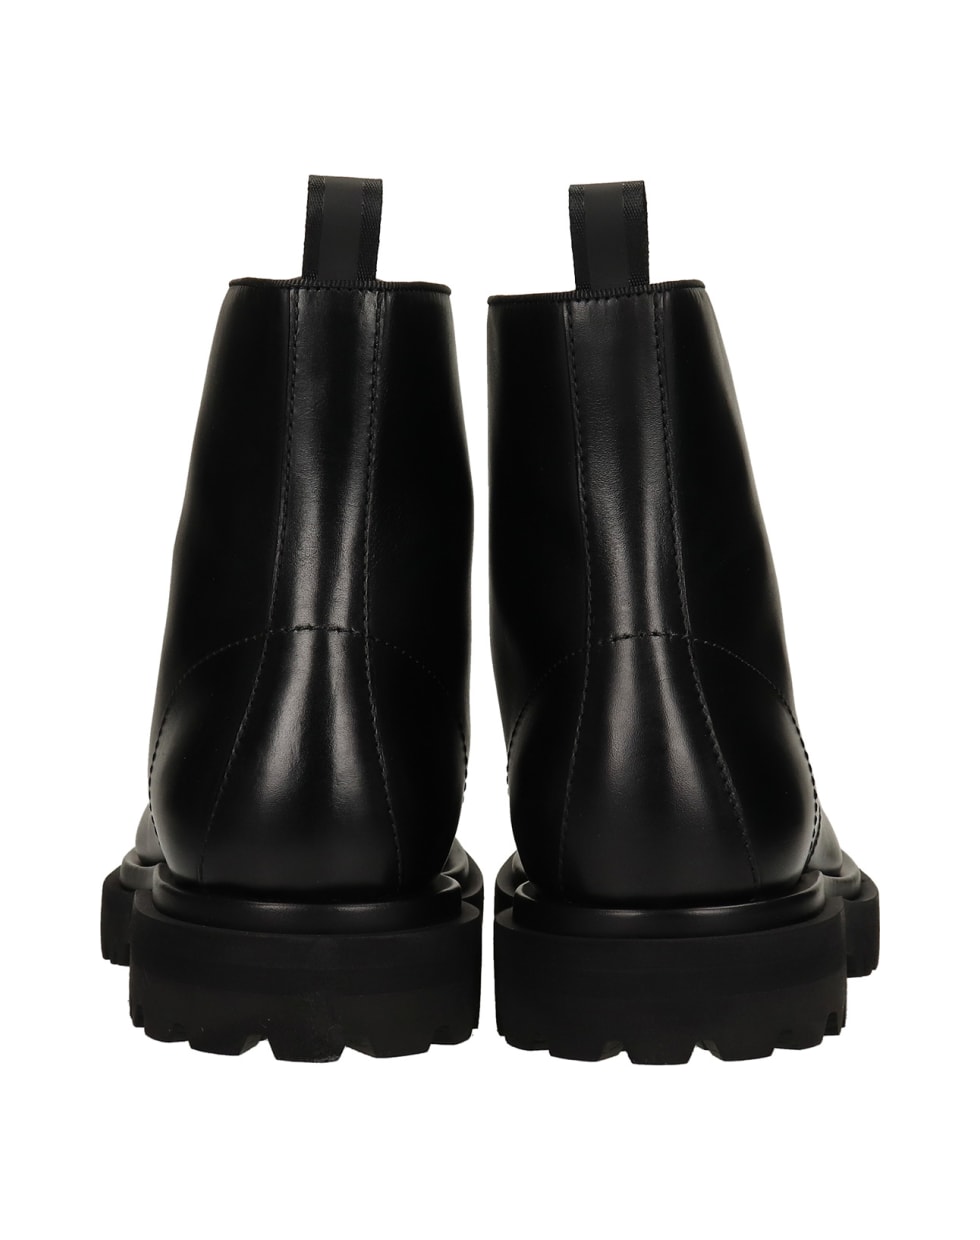 Officine Creative Eventual 002 Combat Boots In Black Leather - black